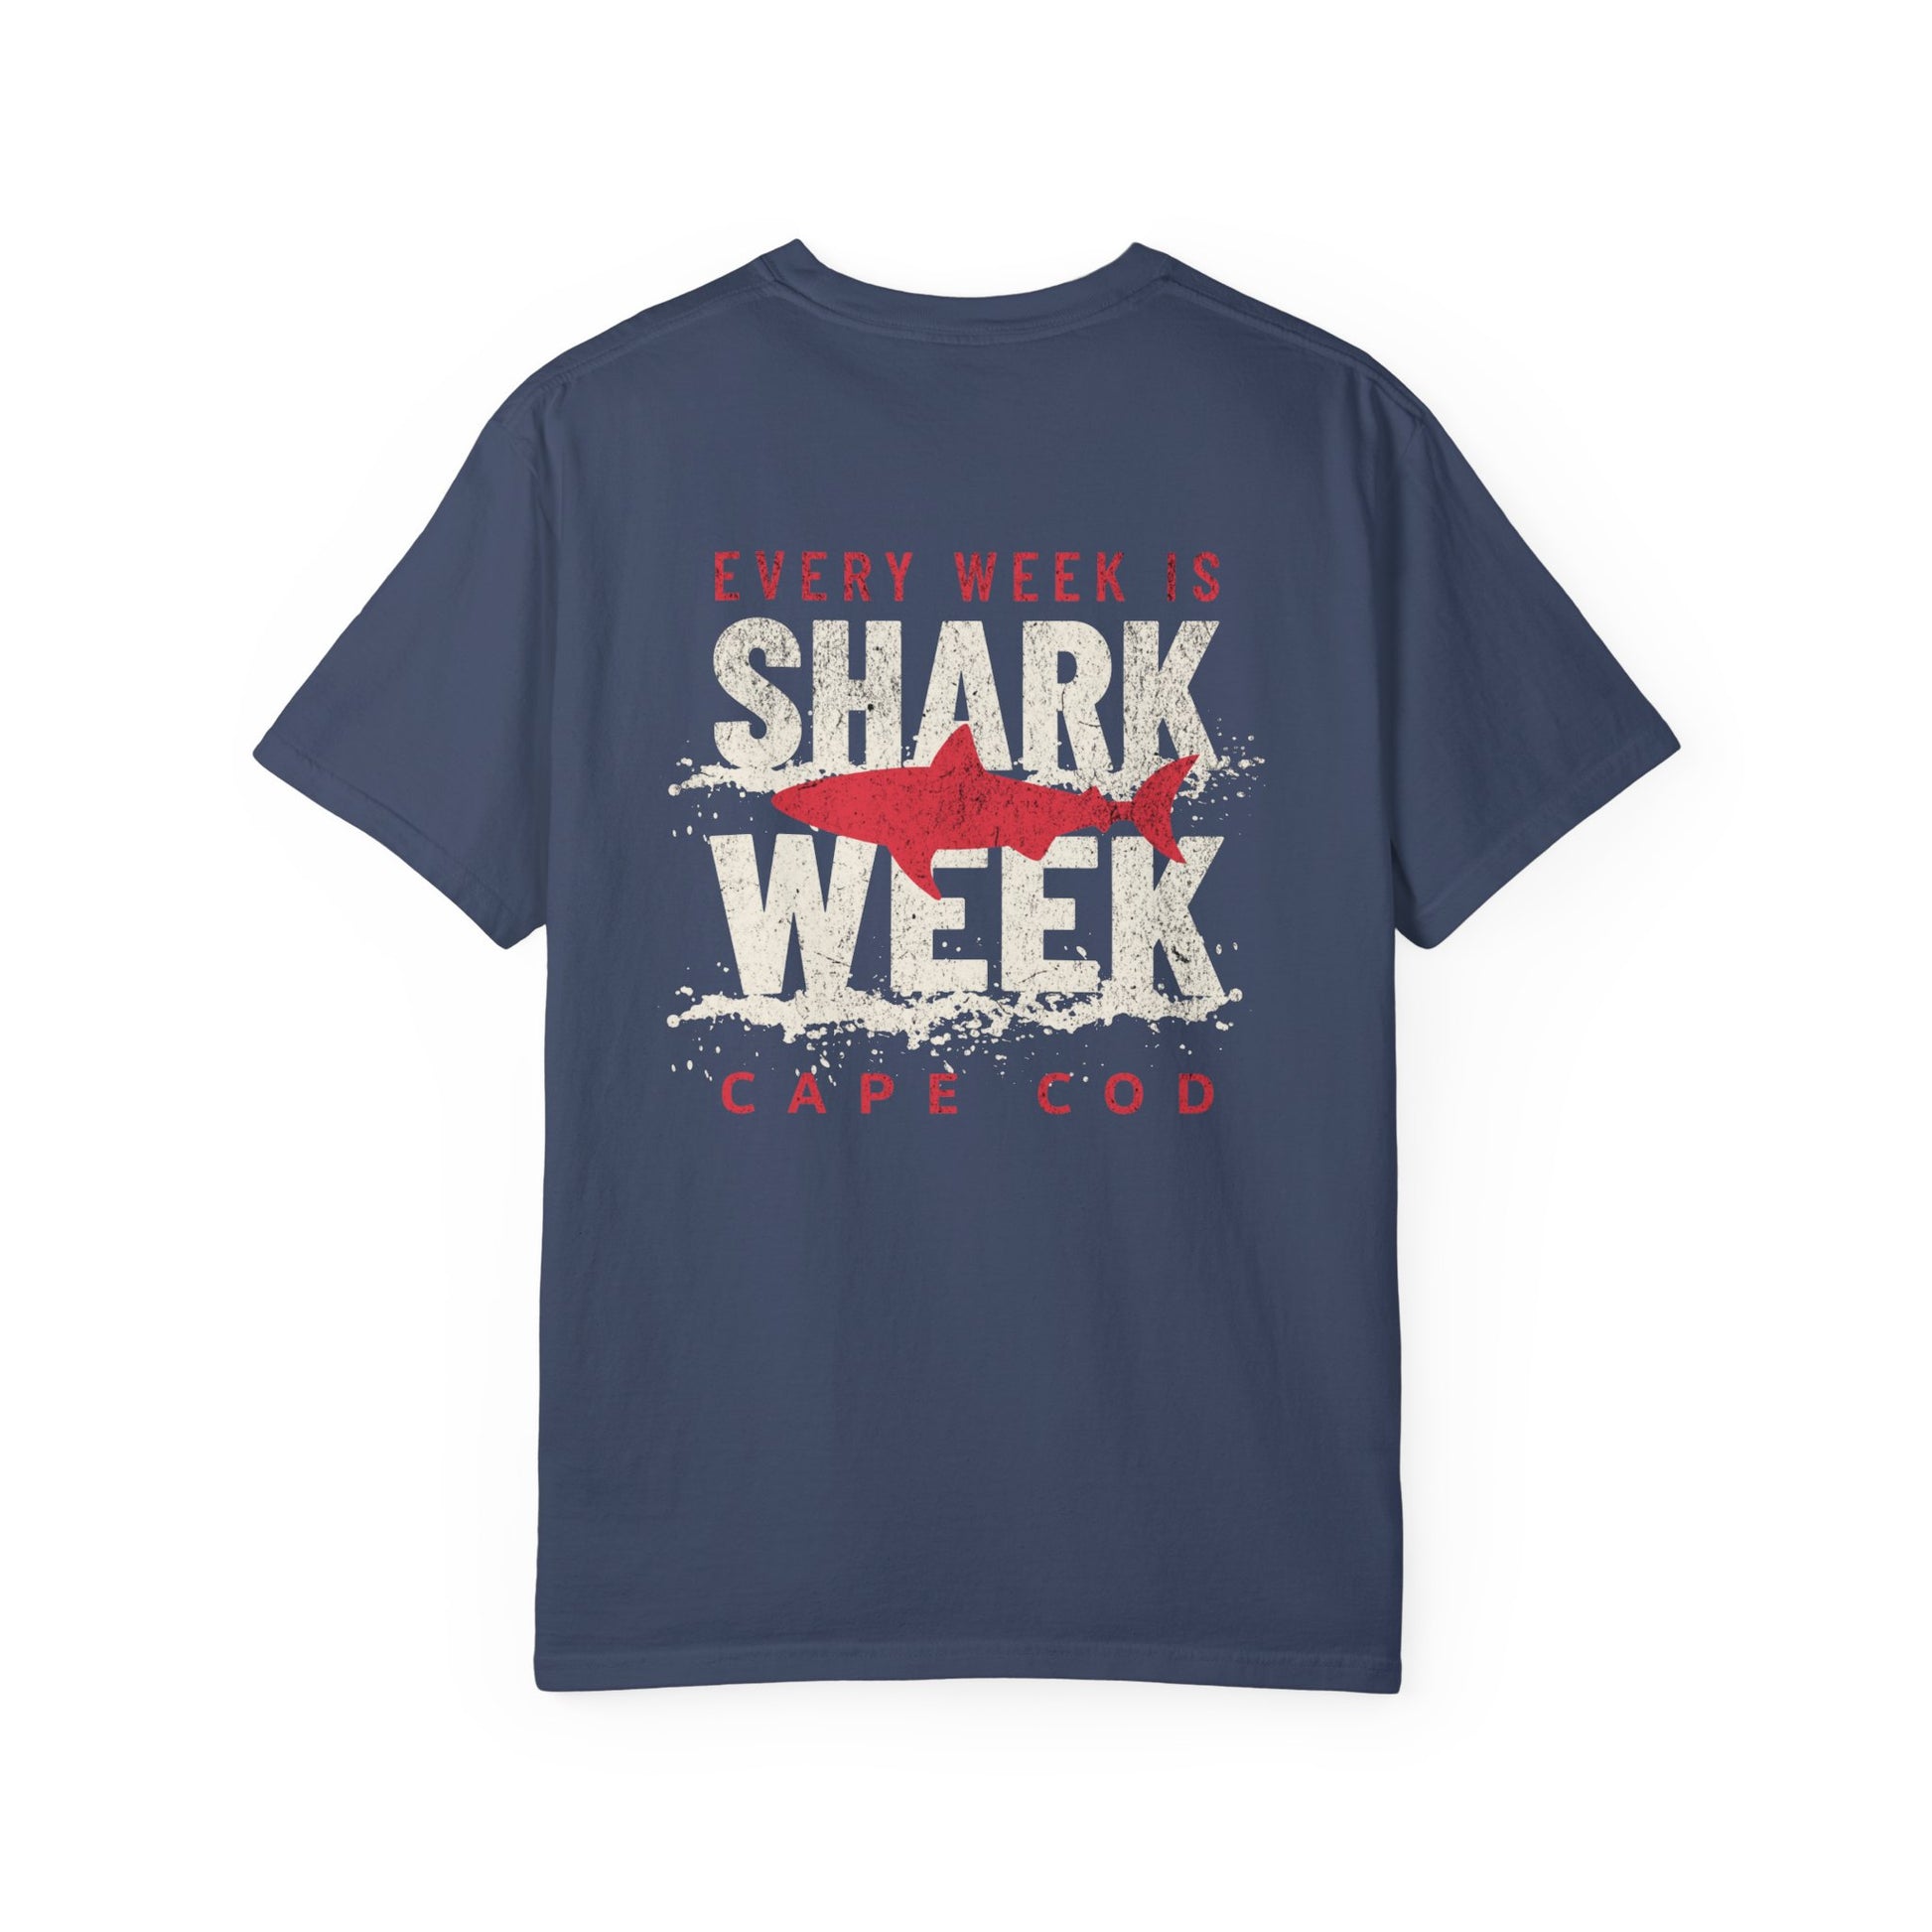 Every Week is Shark week on Cape Cod